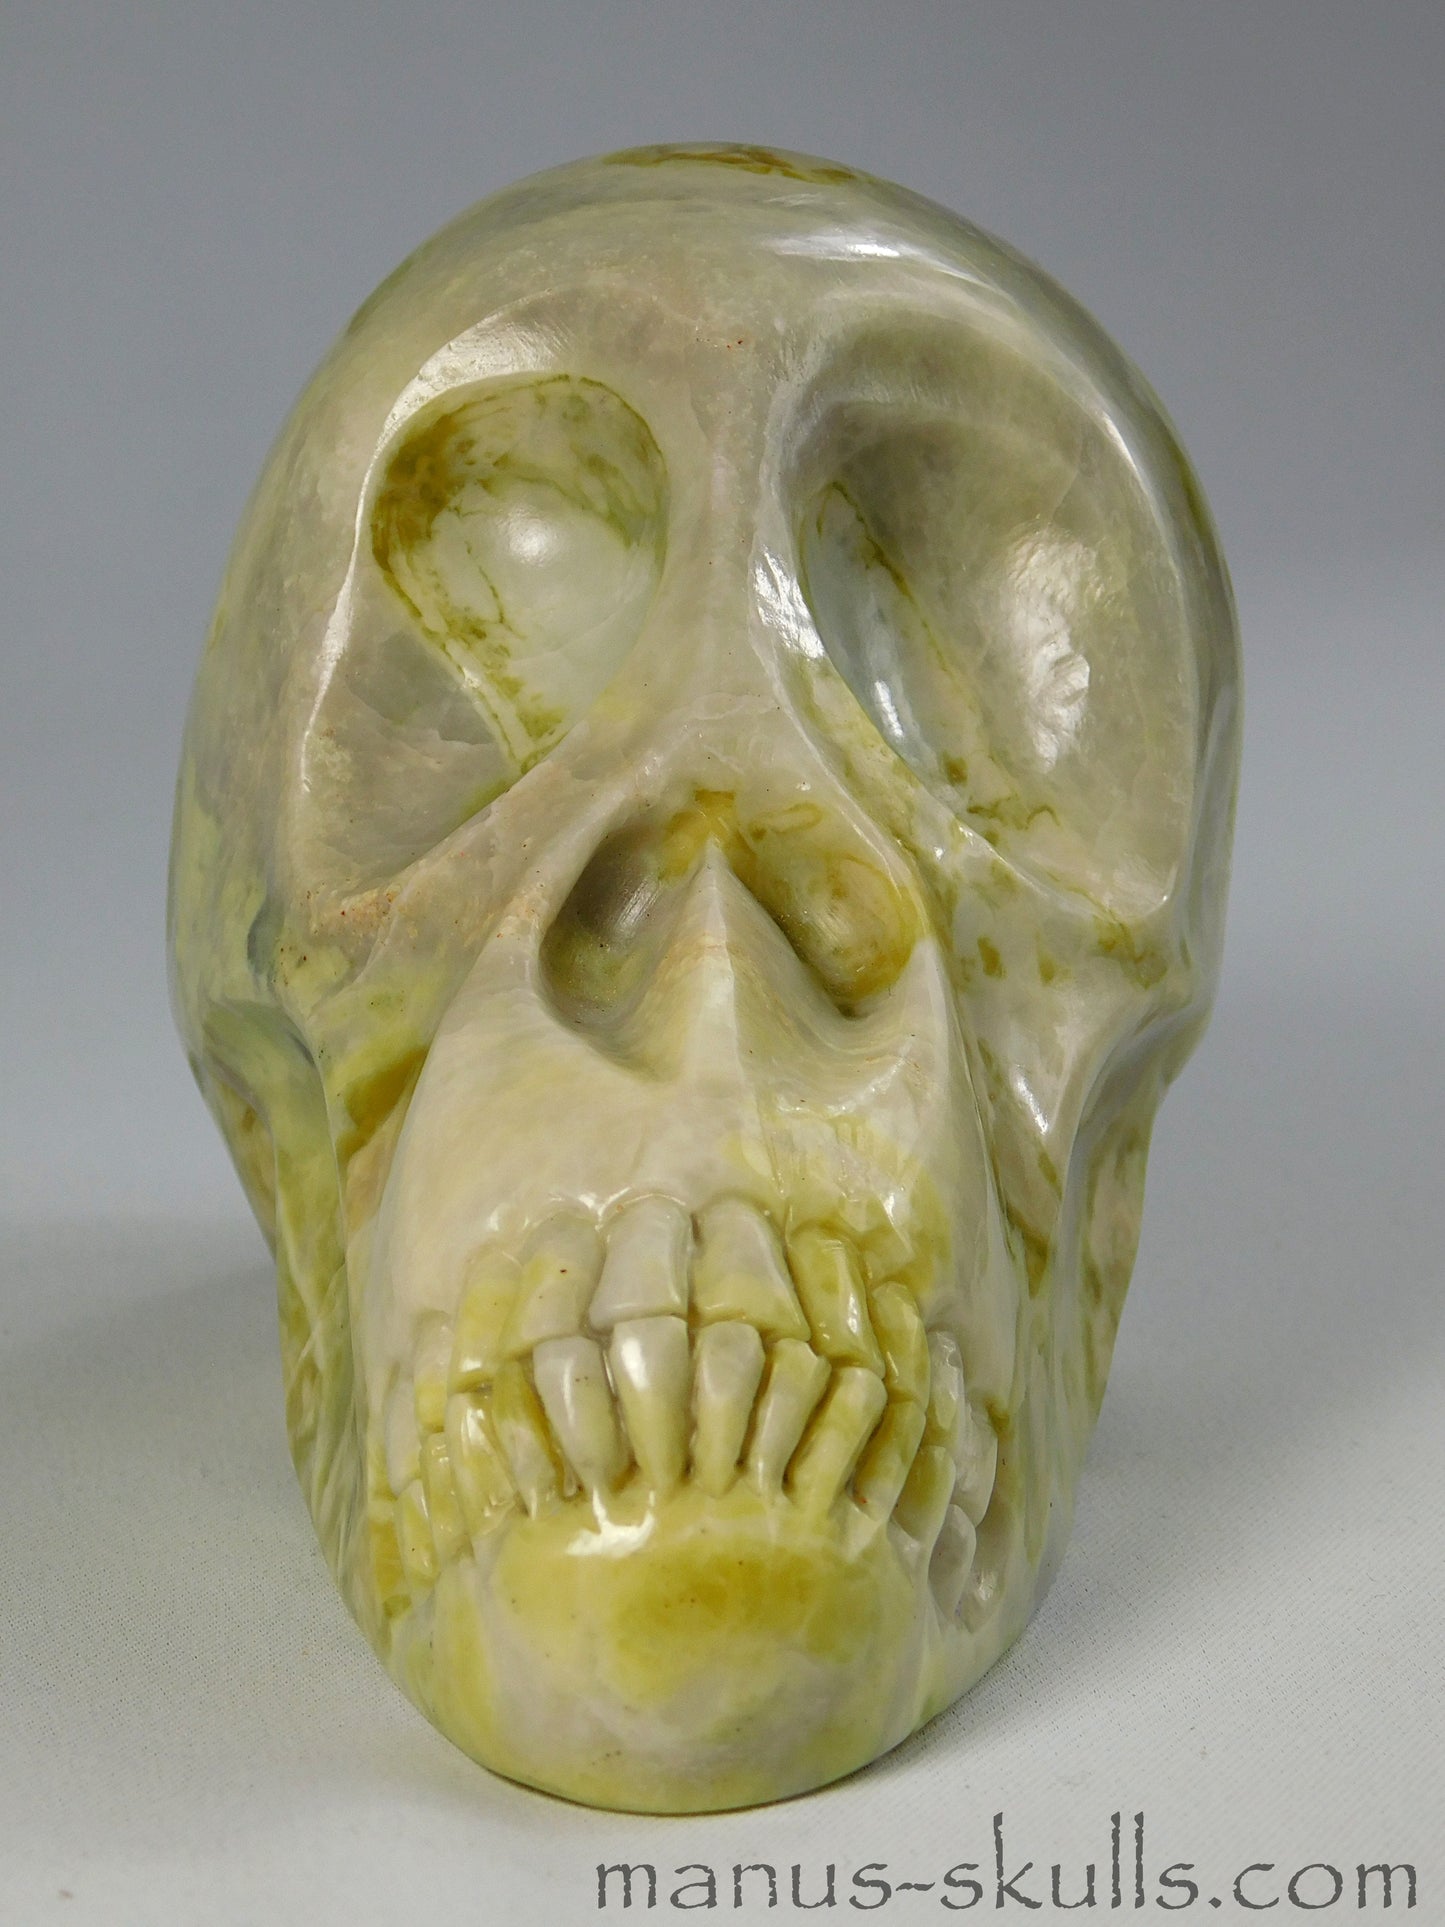 Connemara Marble Skull